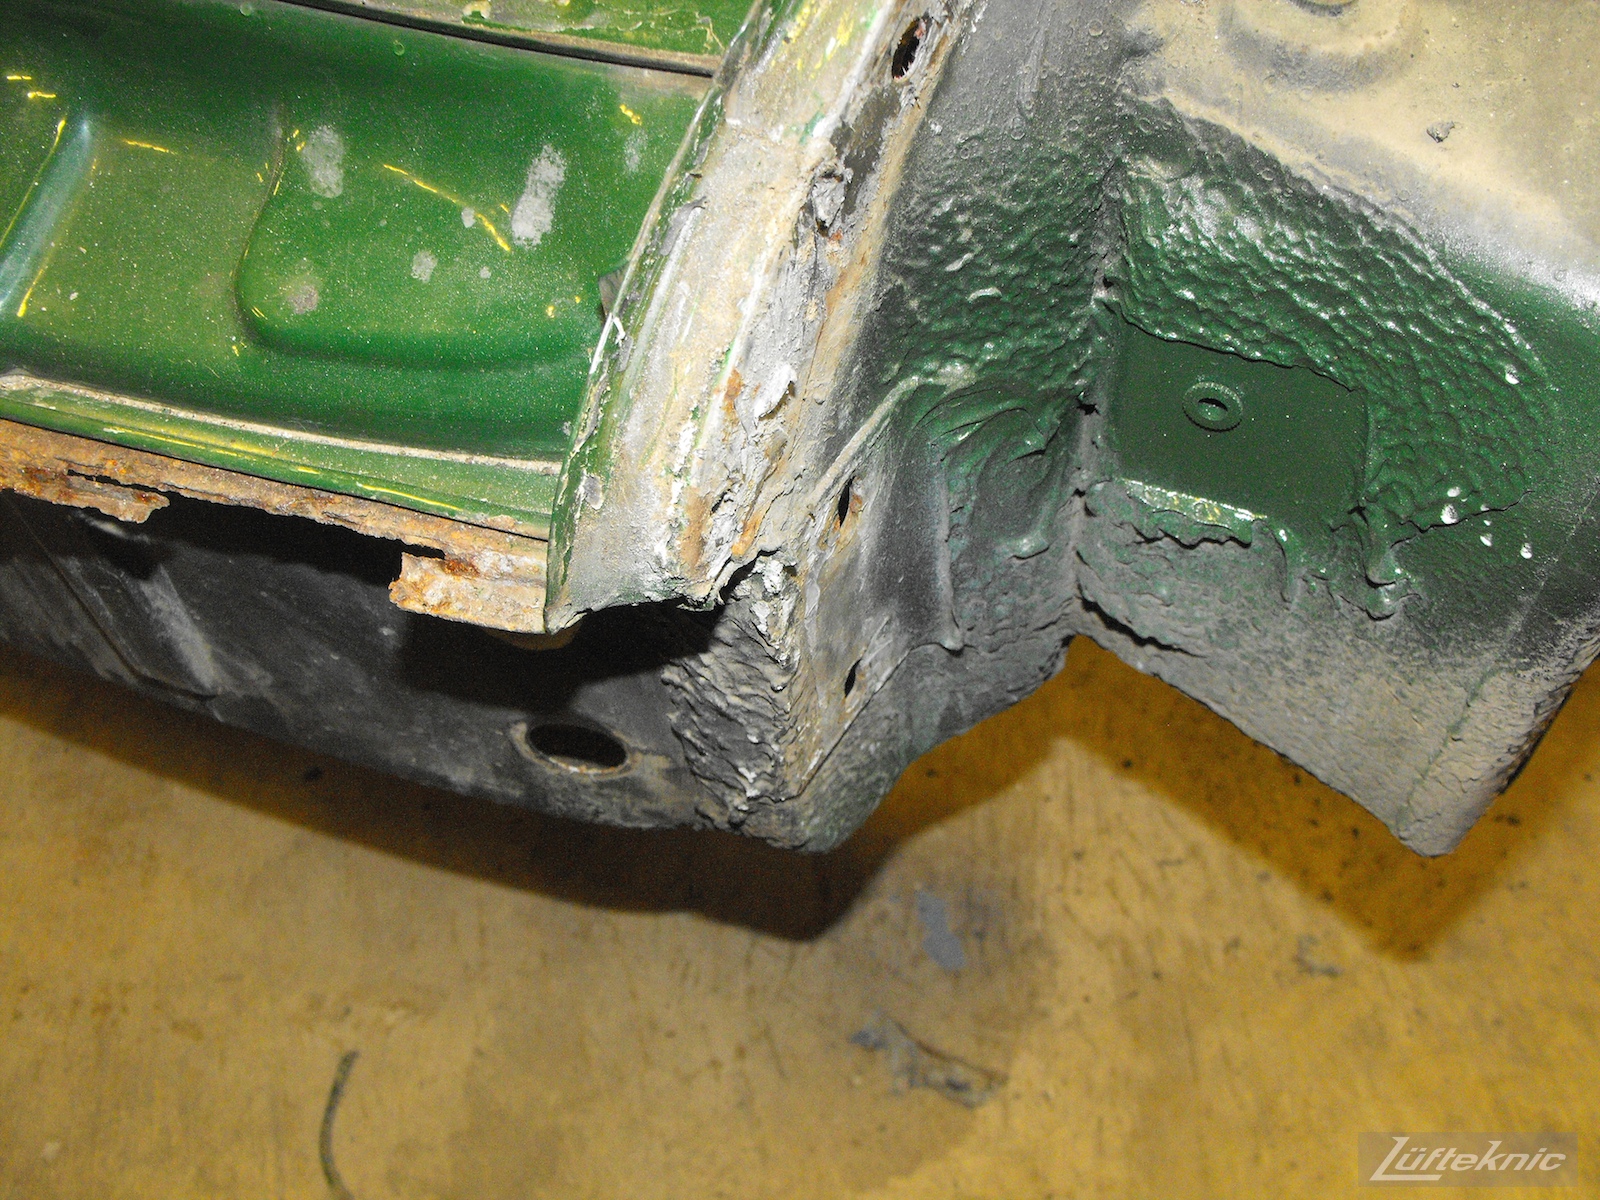 Front pan damage on an Irish Green Porsche 912 undergoing restoration at Lufteknic.